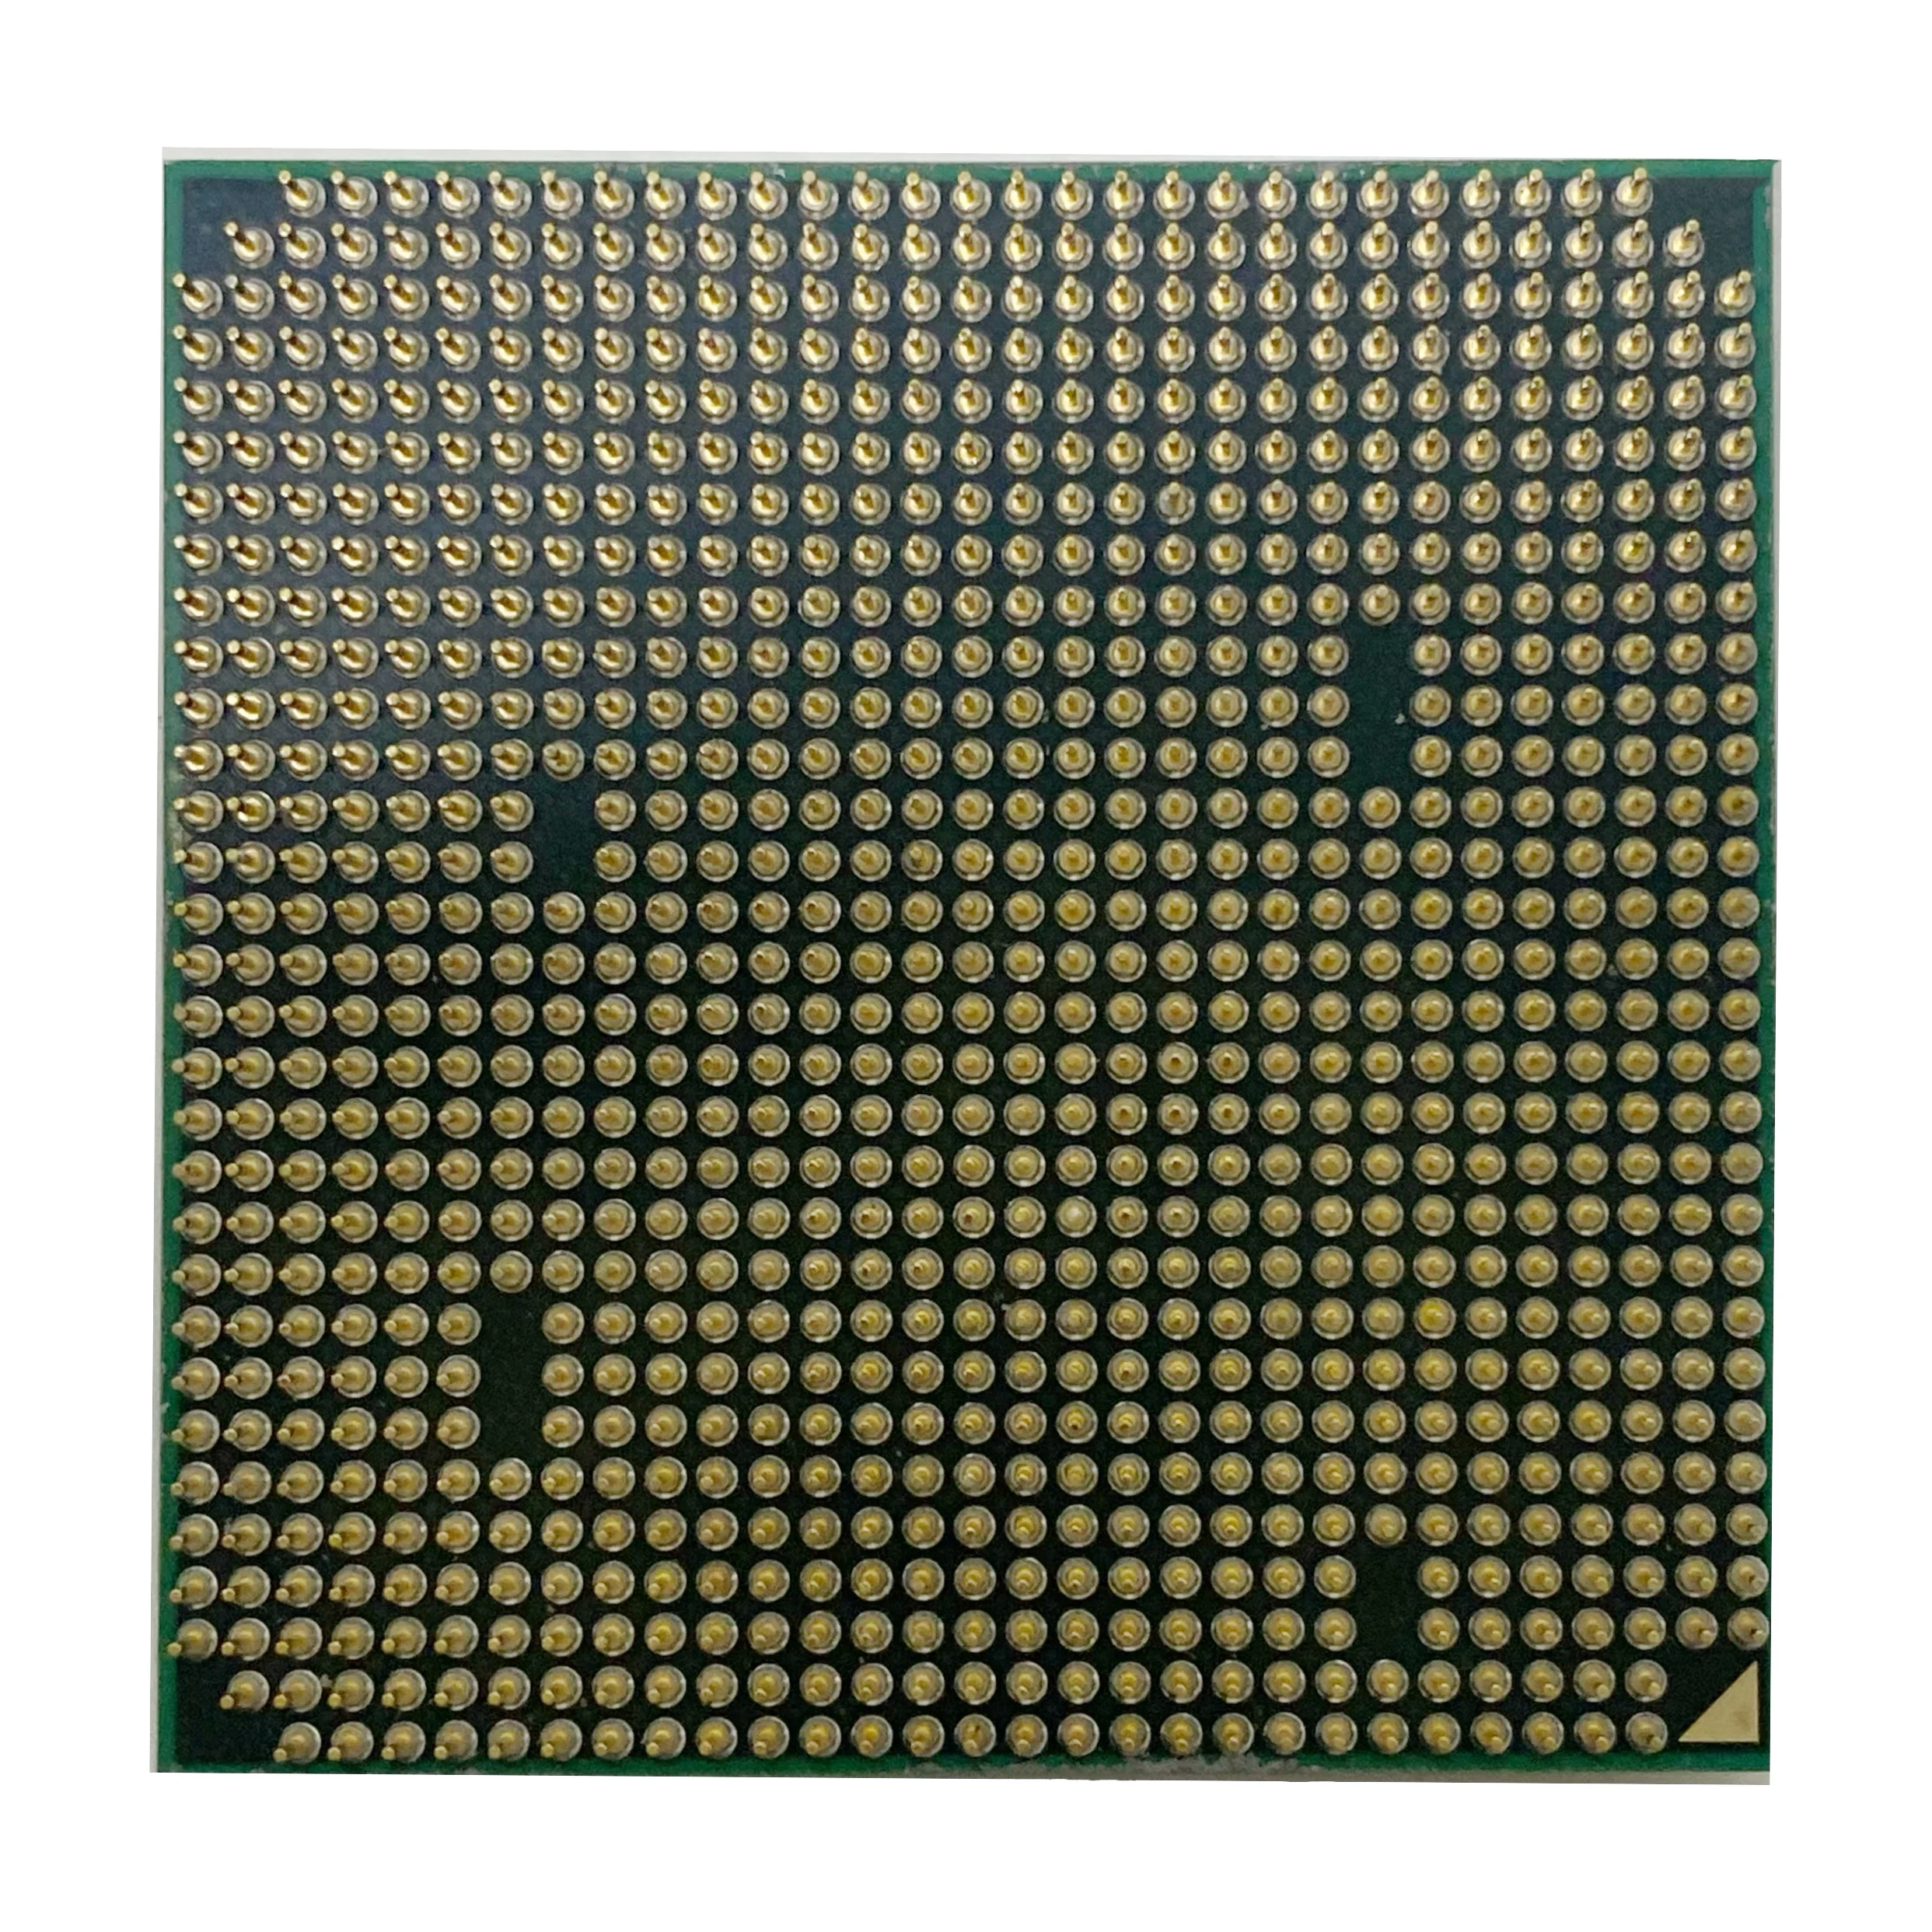 Трехъядерный Процессор AMD Athlon II X3 420E 420 E 2 6 ГГц процессор AD420EHDK32GM разъем AM3